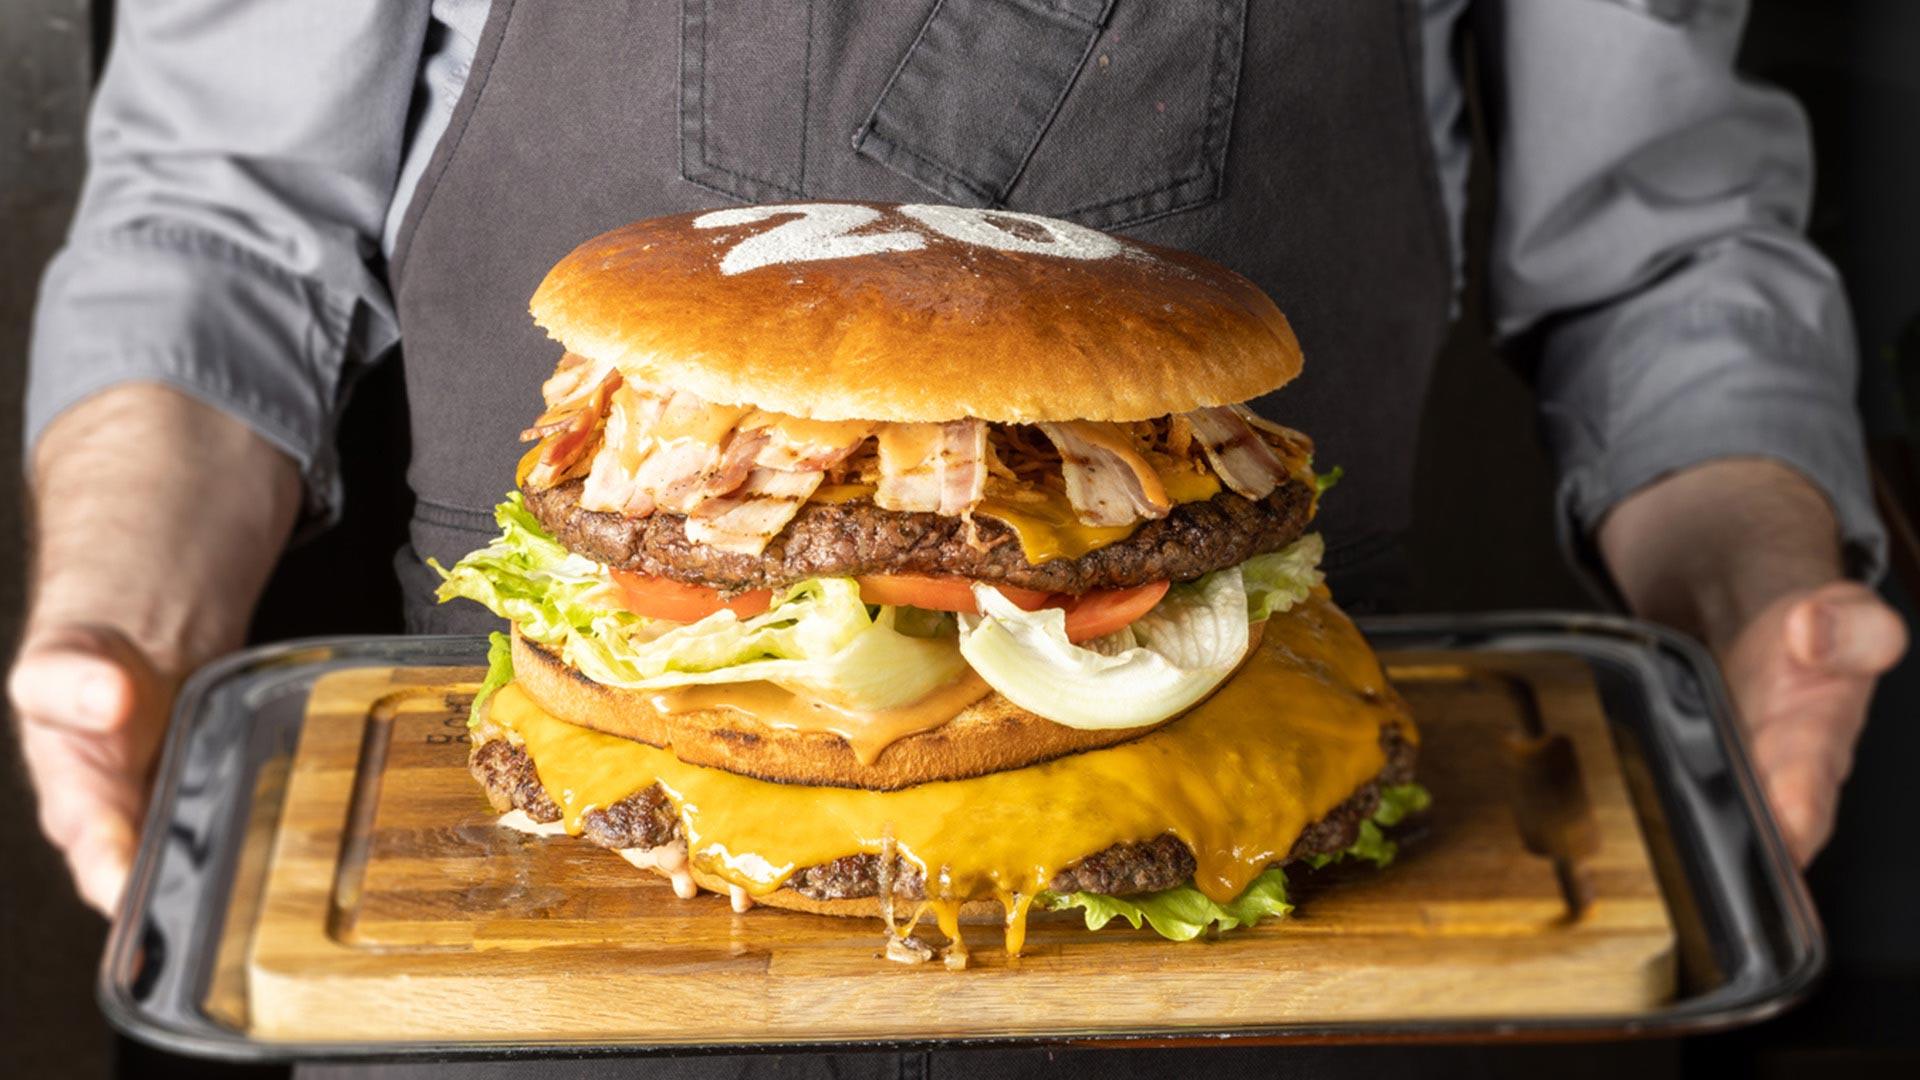 Our Biggest Burger Ever - The Grand Oak Door Burger